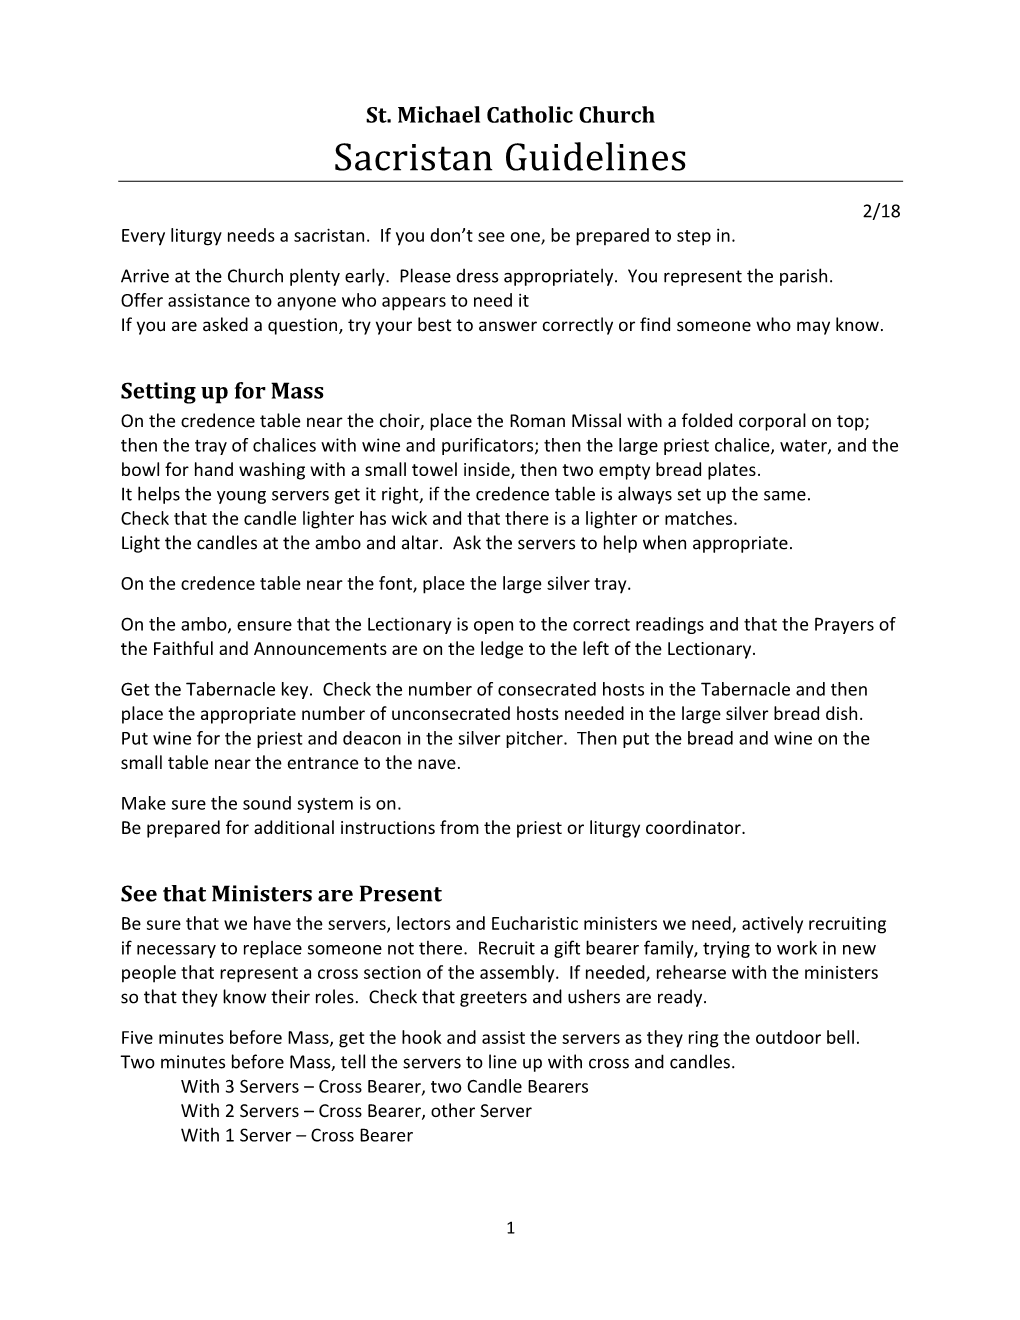 Sacristan Guidelines